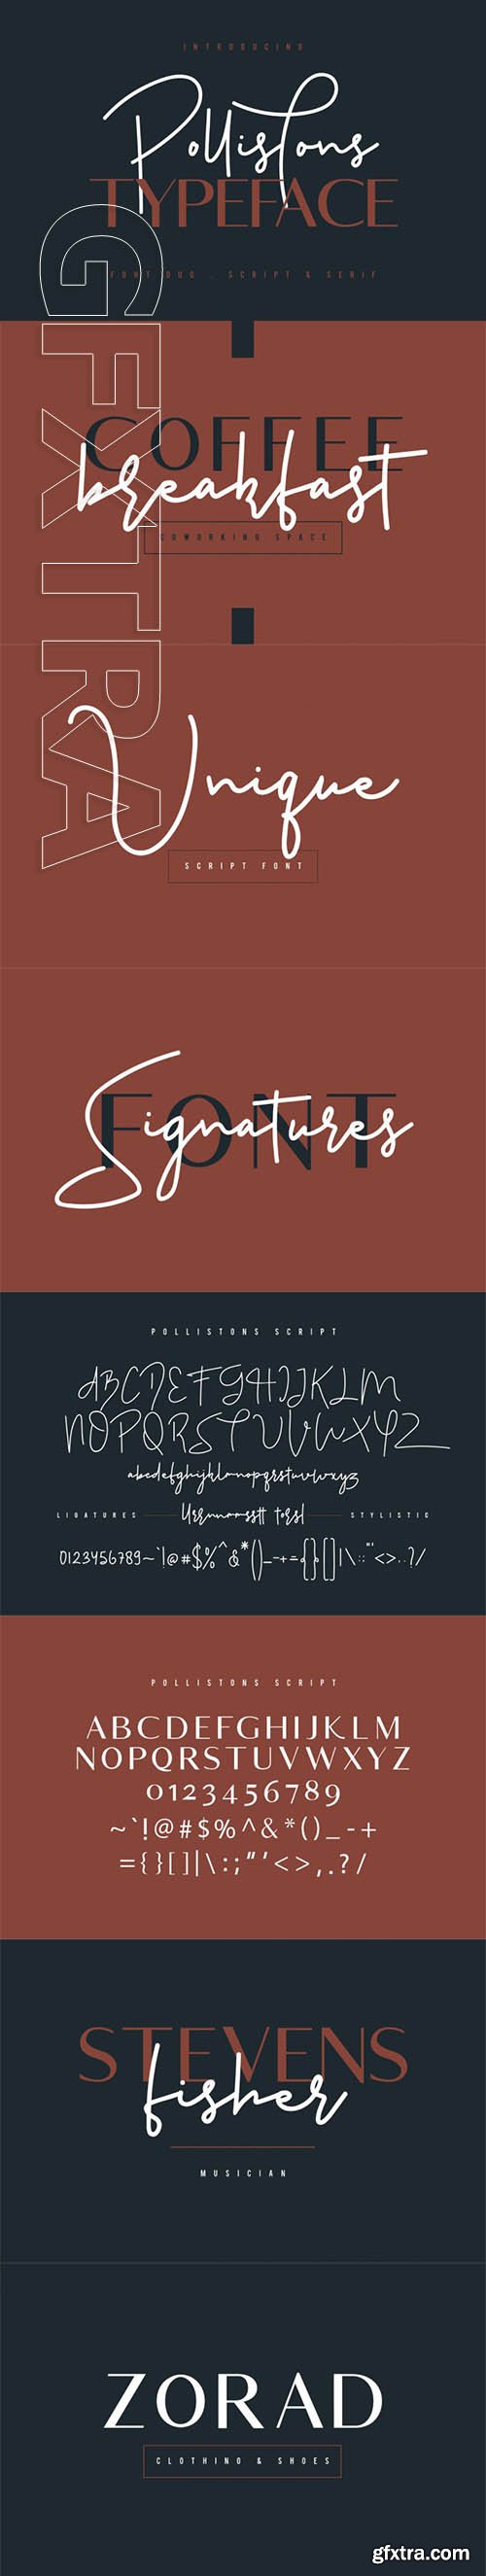 Pollistons Signature Font